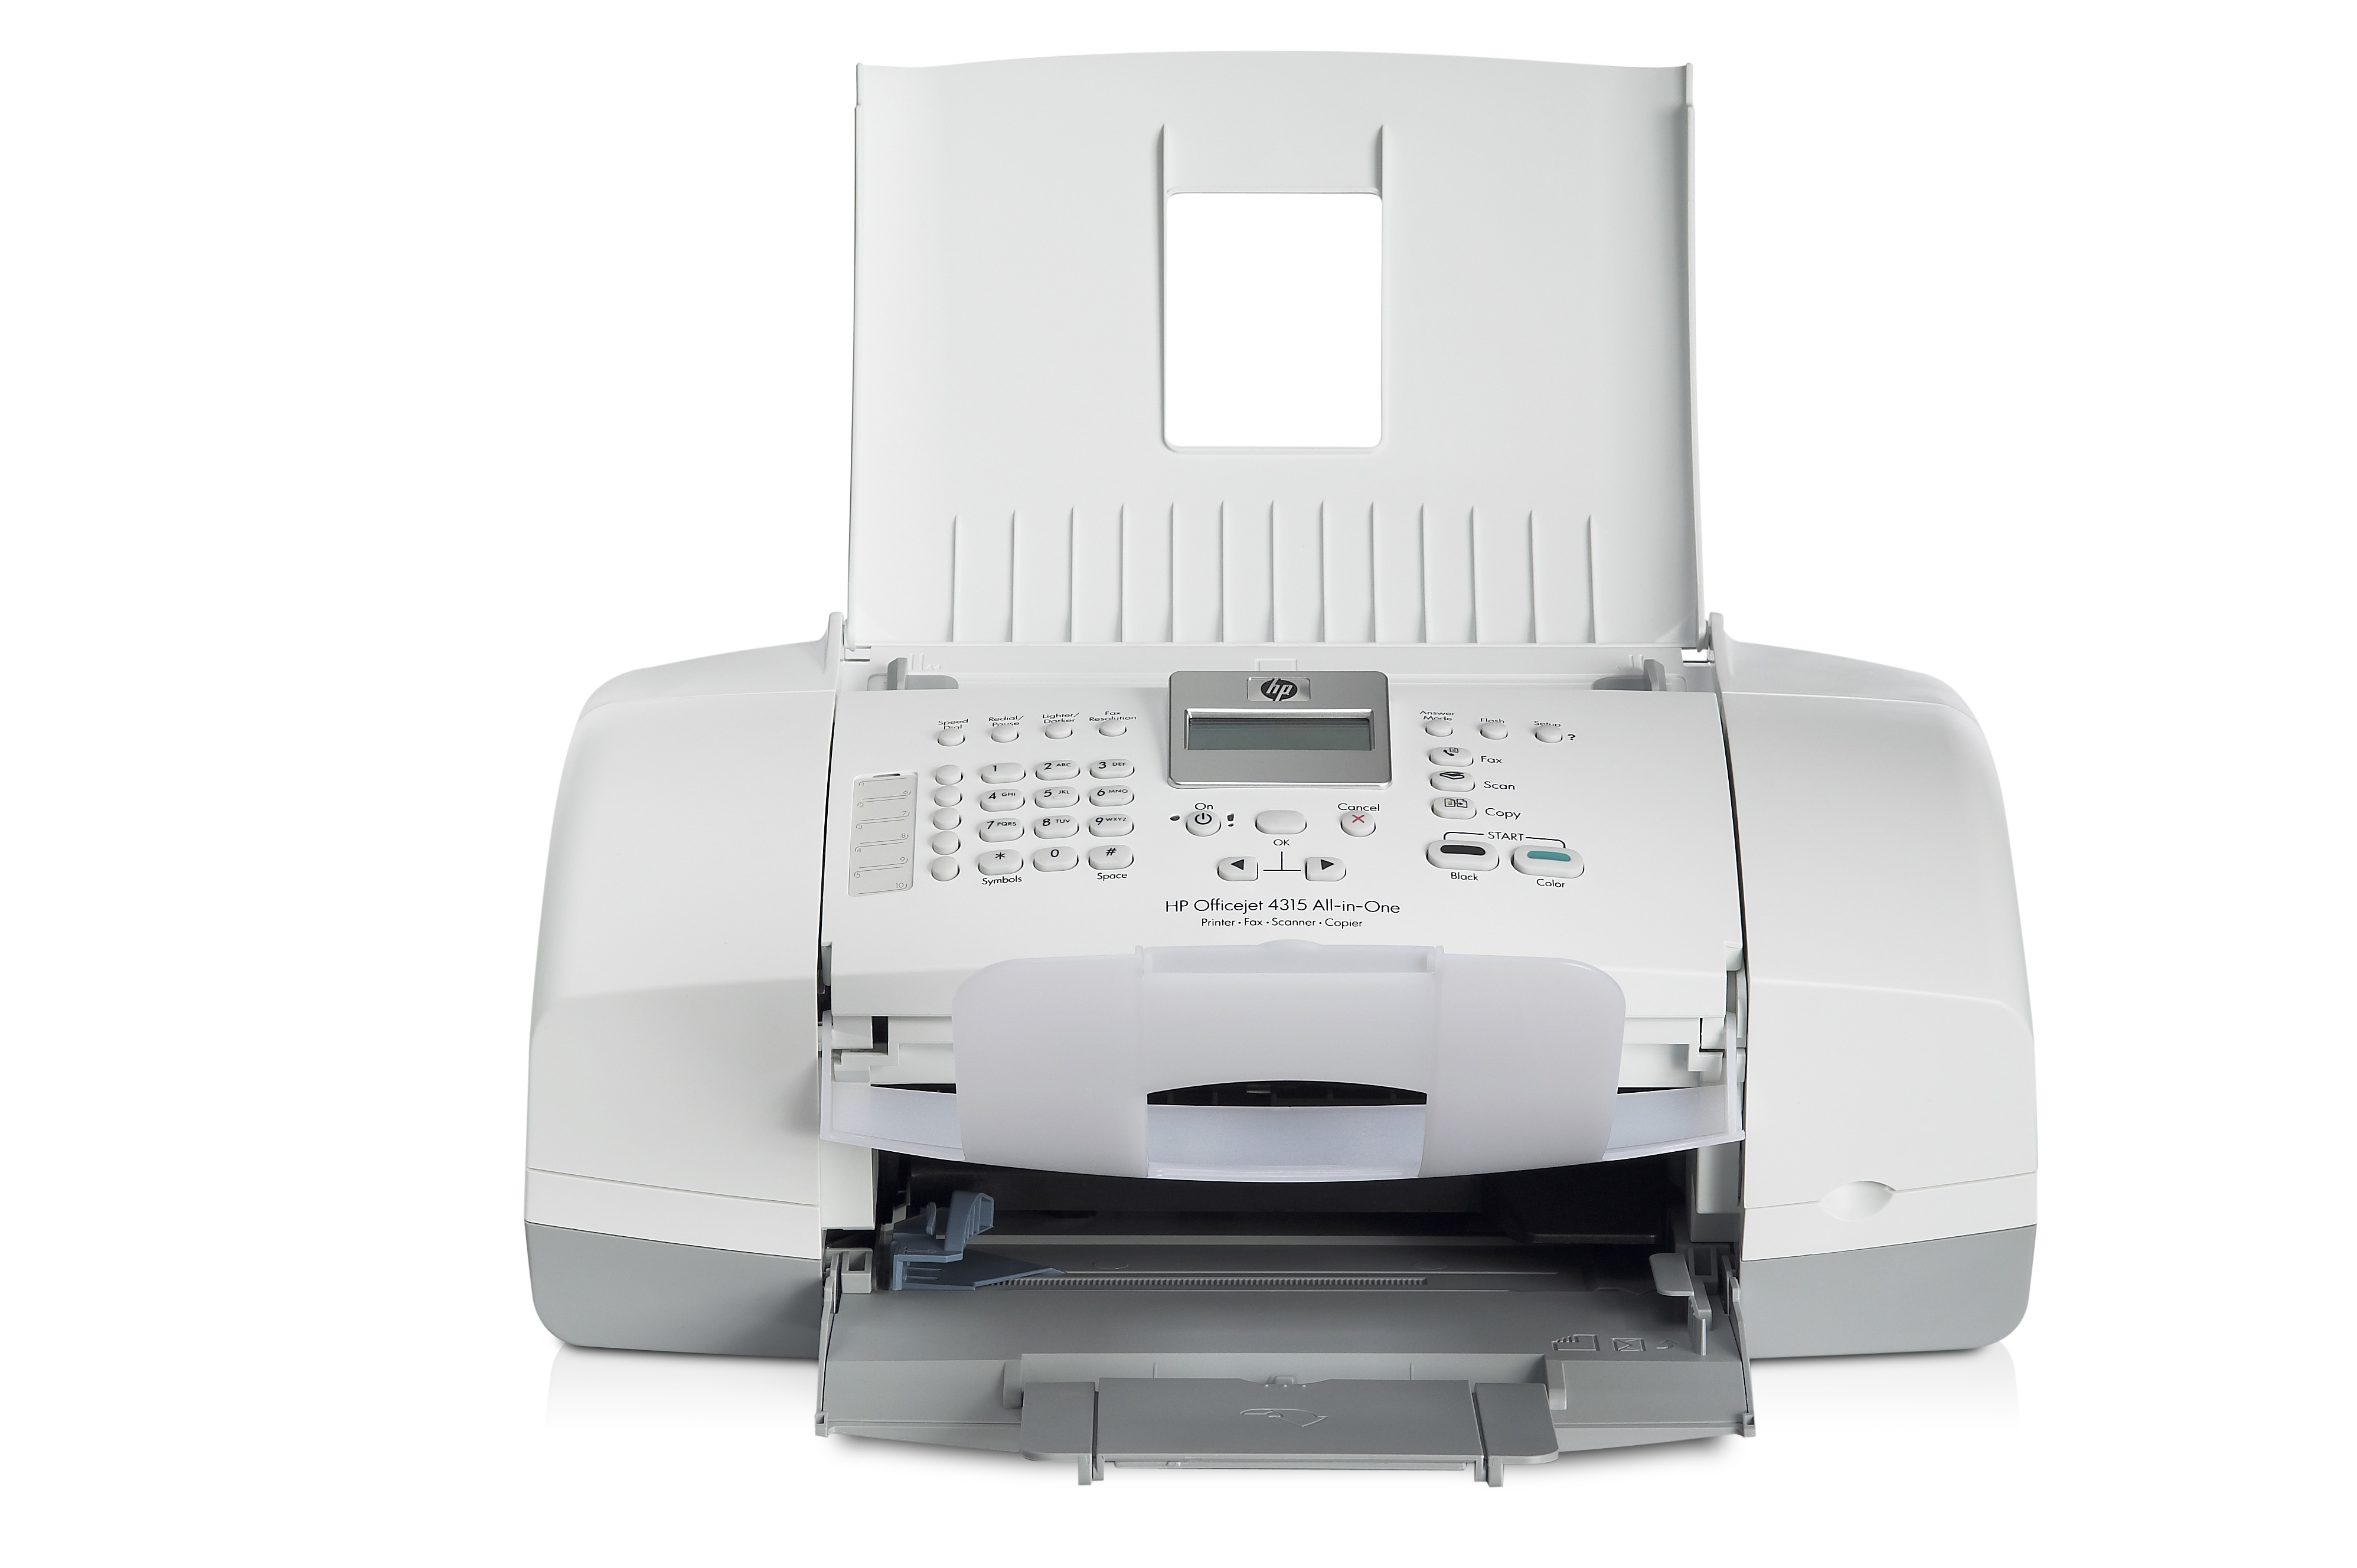 Q081A-Service/Repair q8081a HP officejet 4315 inkjet printer - Service/Repair (Excluding Parts)